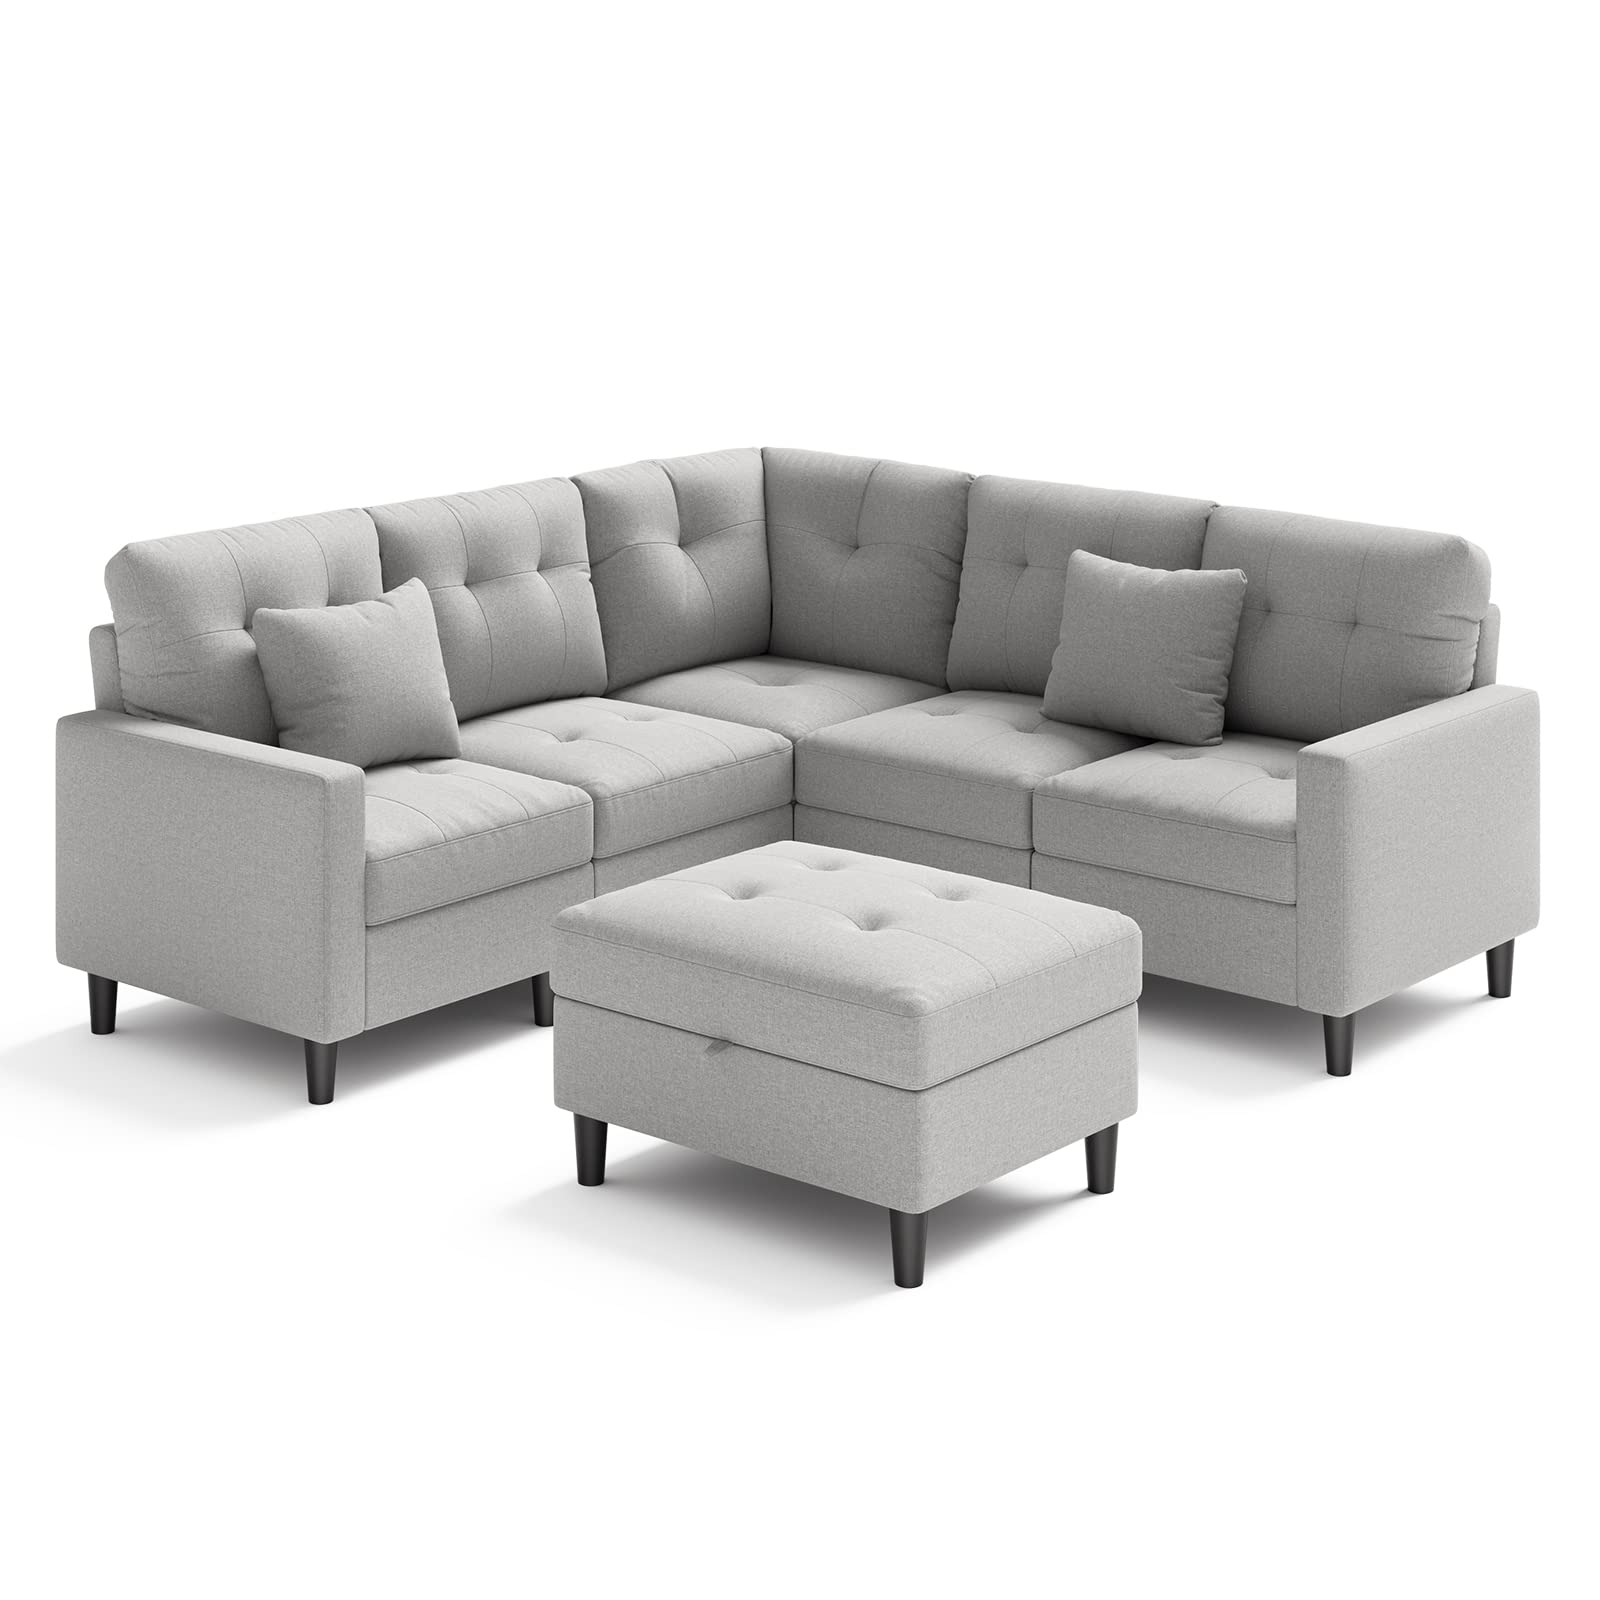 Giantex Modular Sectional Sofa Couch